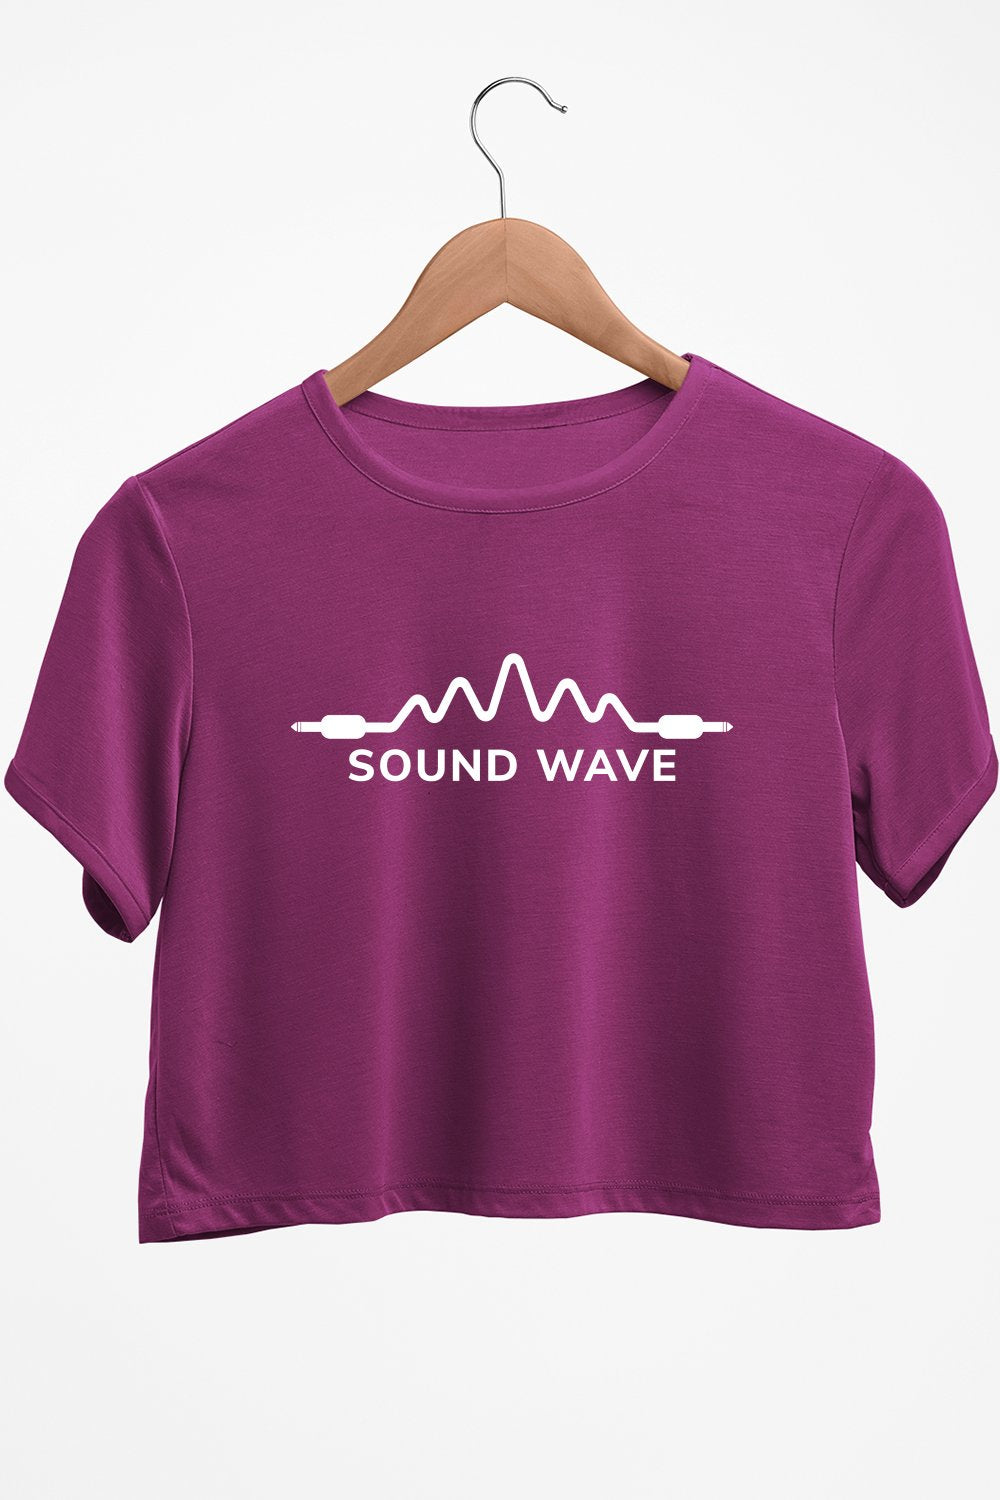 Sound Wave Graphic Printed Purple Crop Top